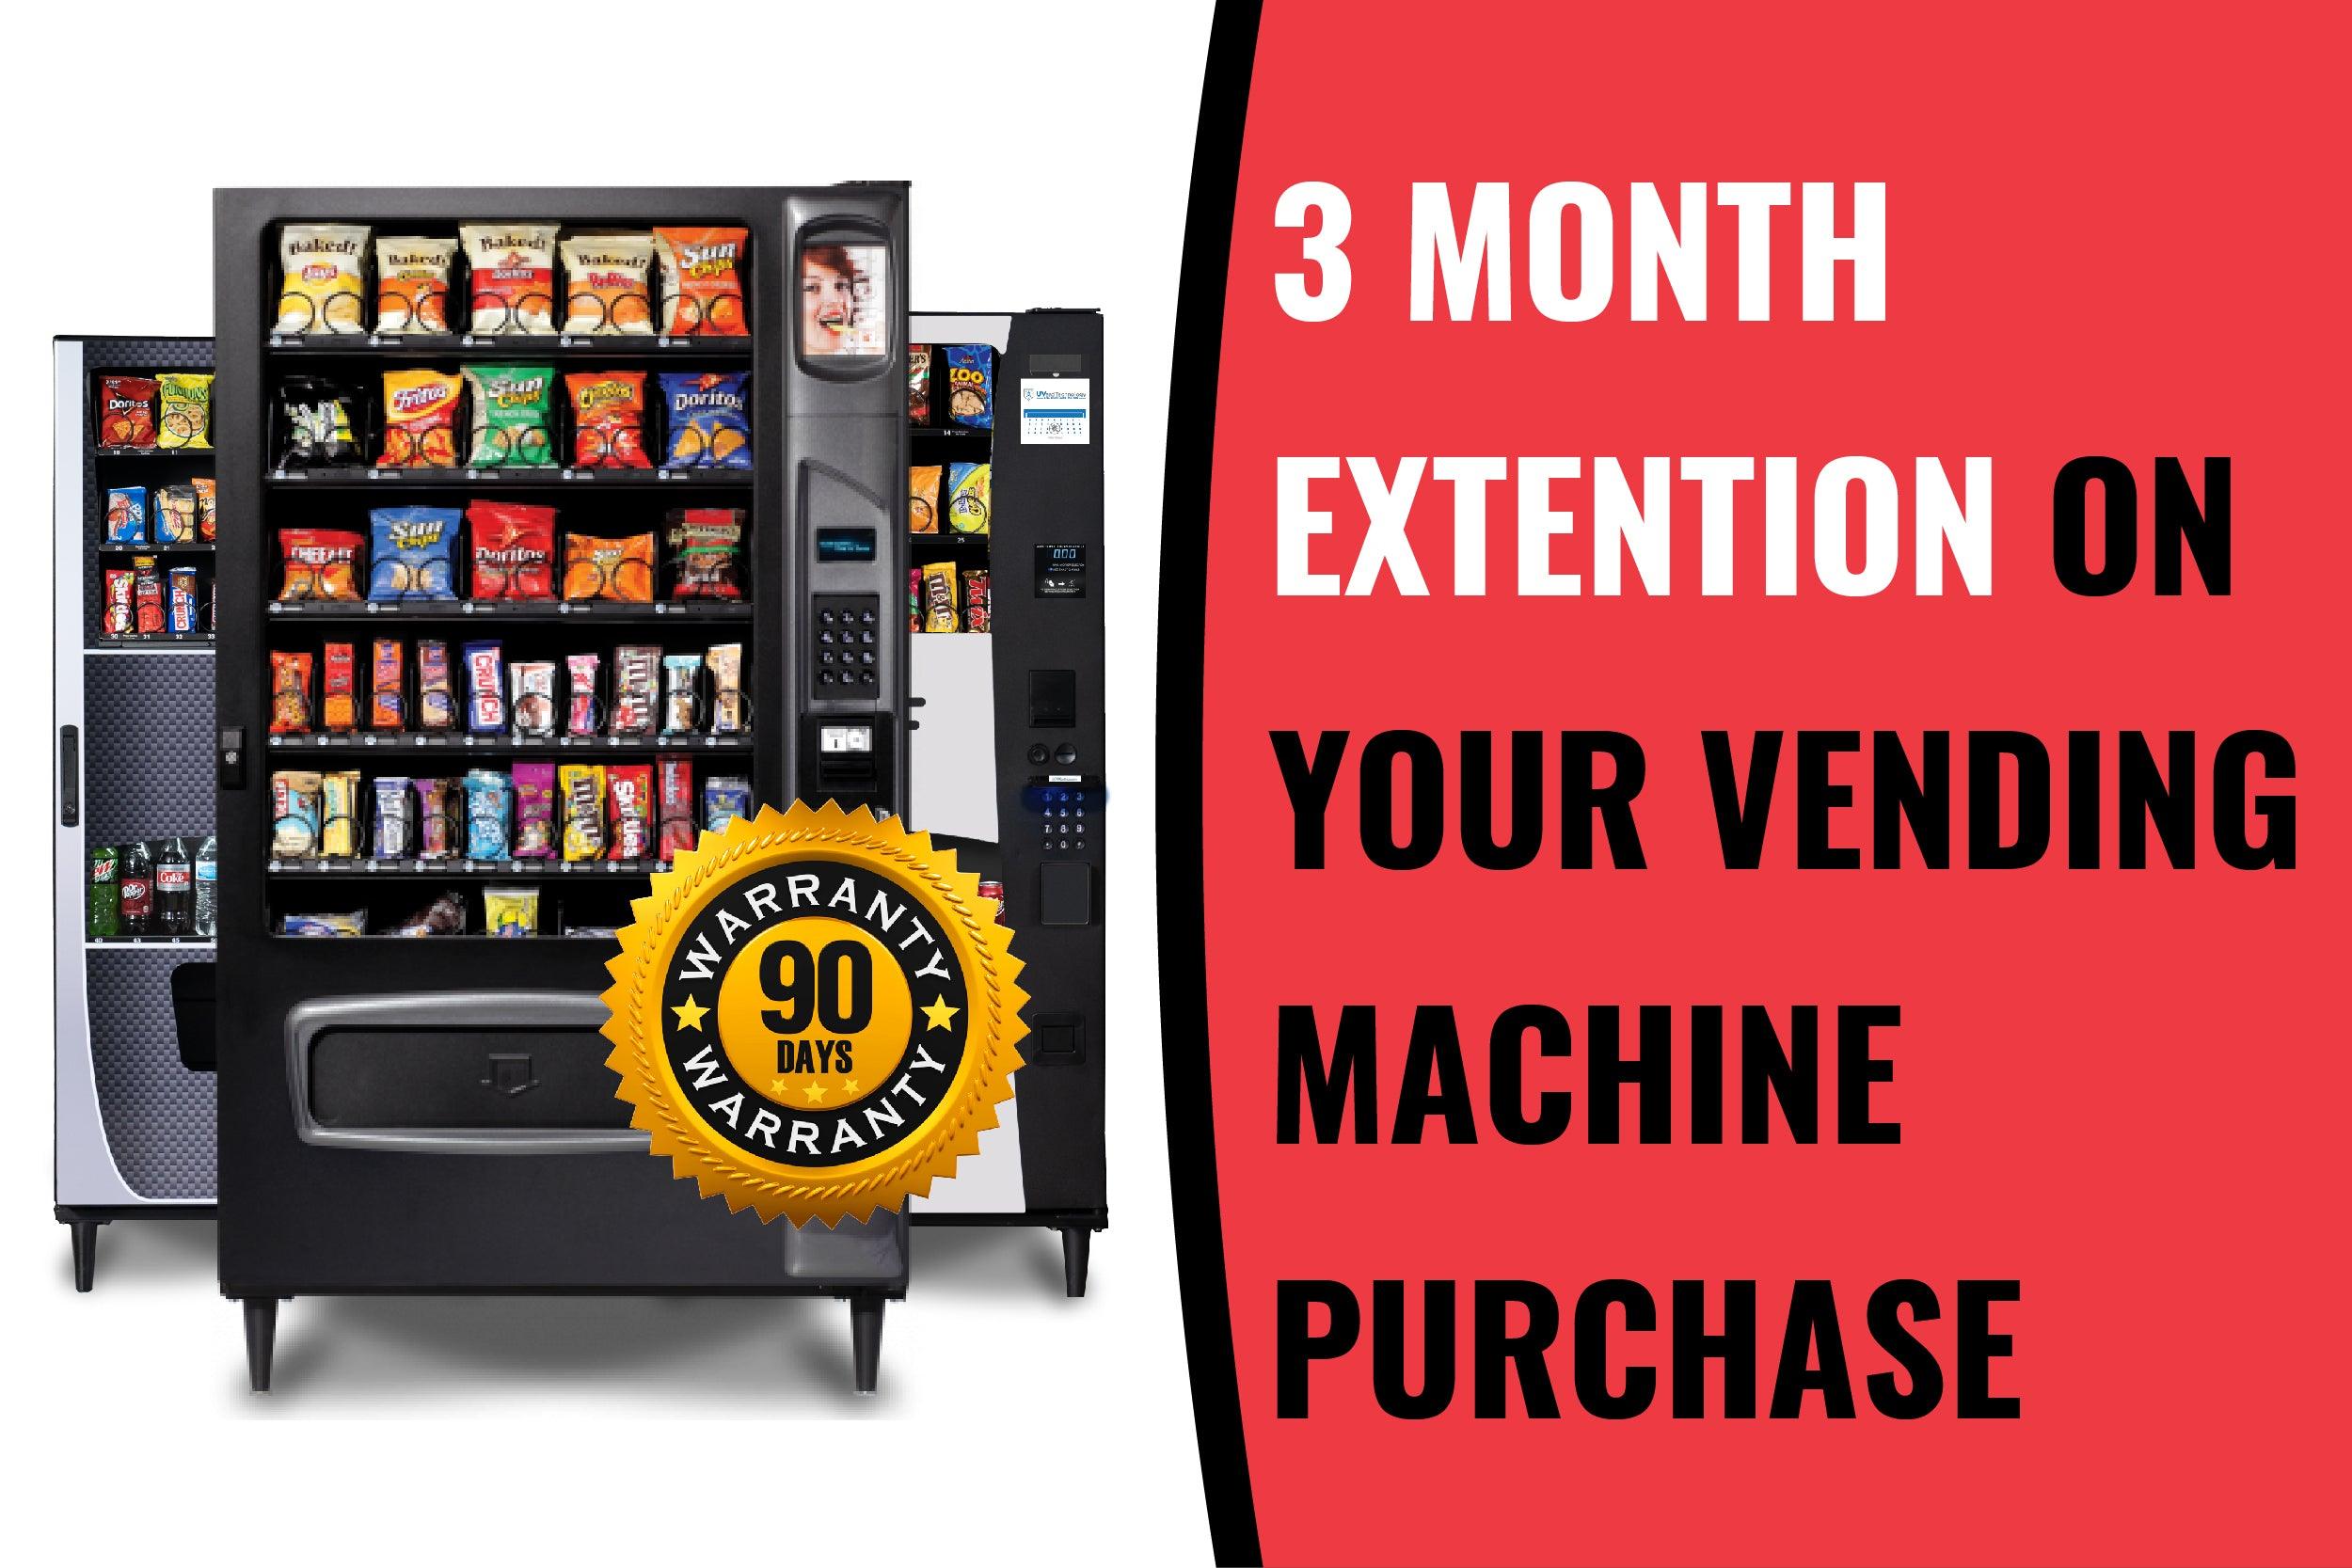 Vendnet Special: 3 Month Extention on Your Vending Machine Purchase - Vendnet